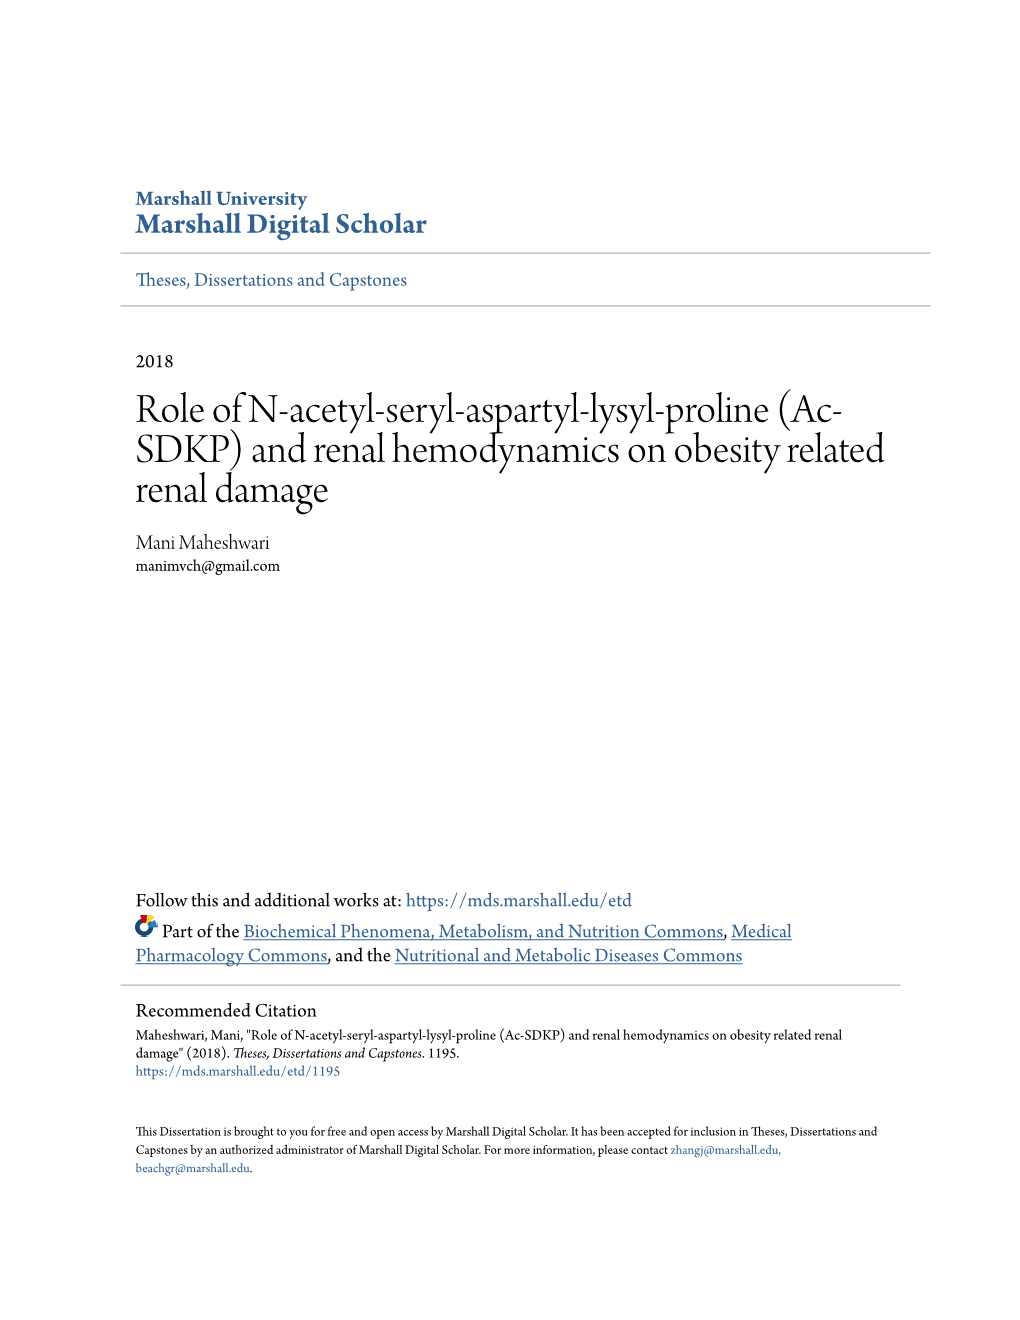 Ac-SDKP) and Renal Hemodynamics on Obesity Related Renal Damage" (2018)